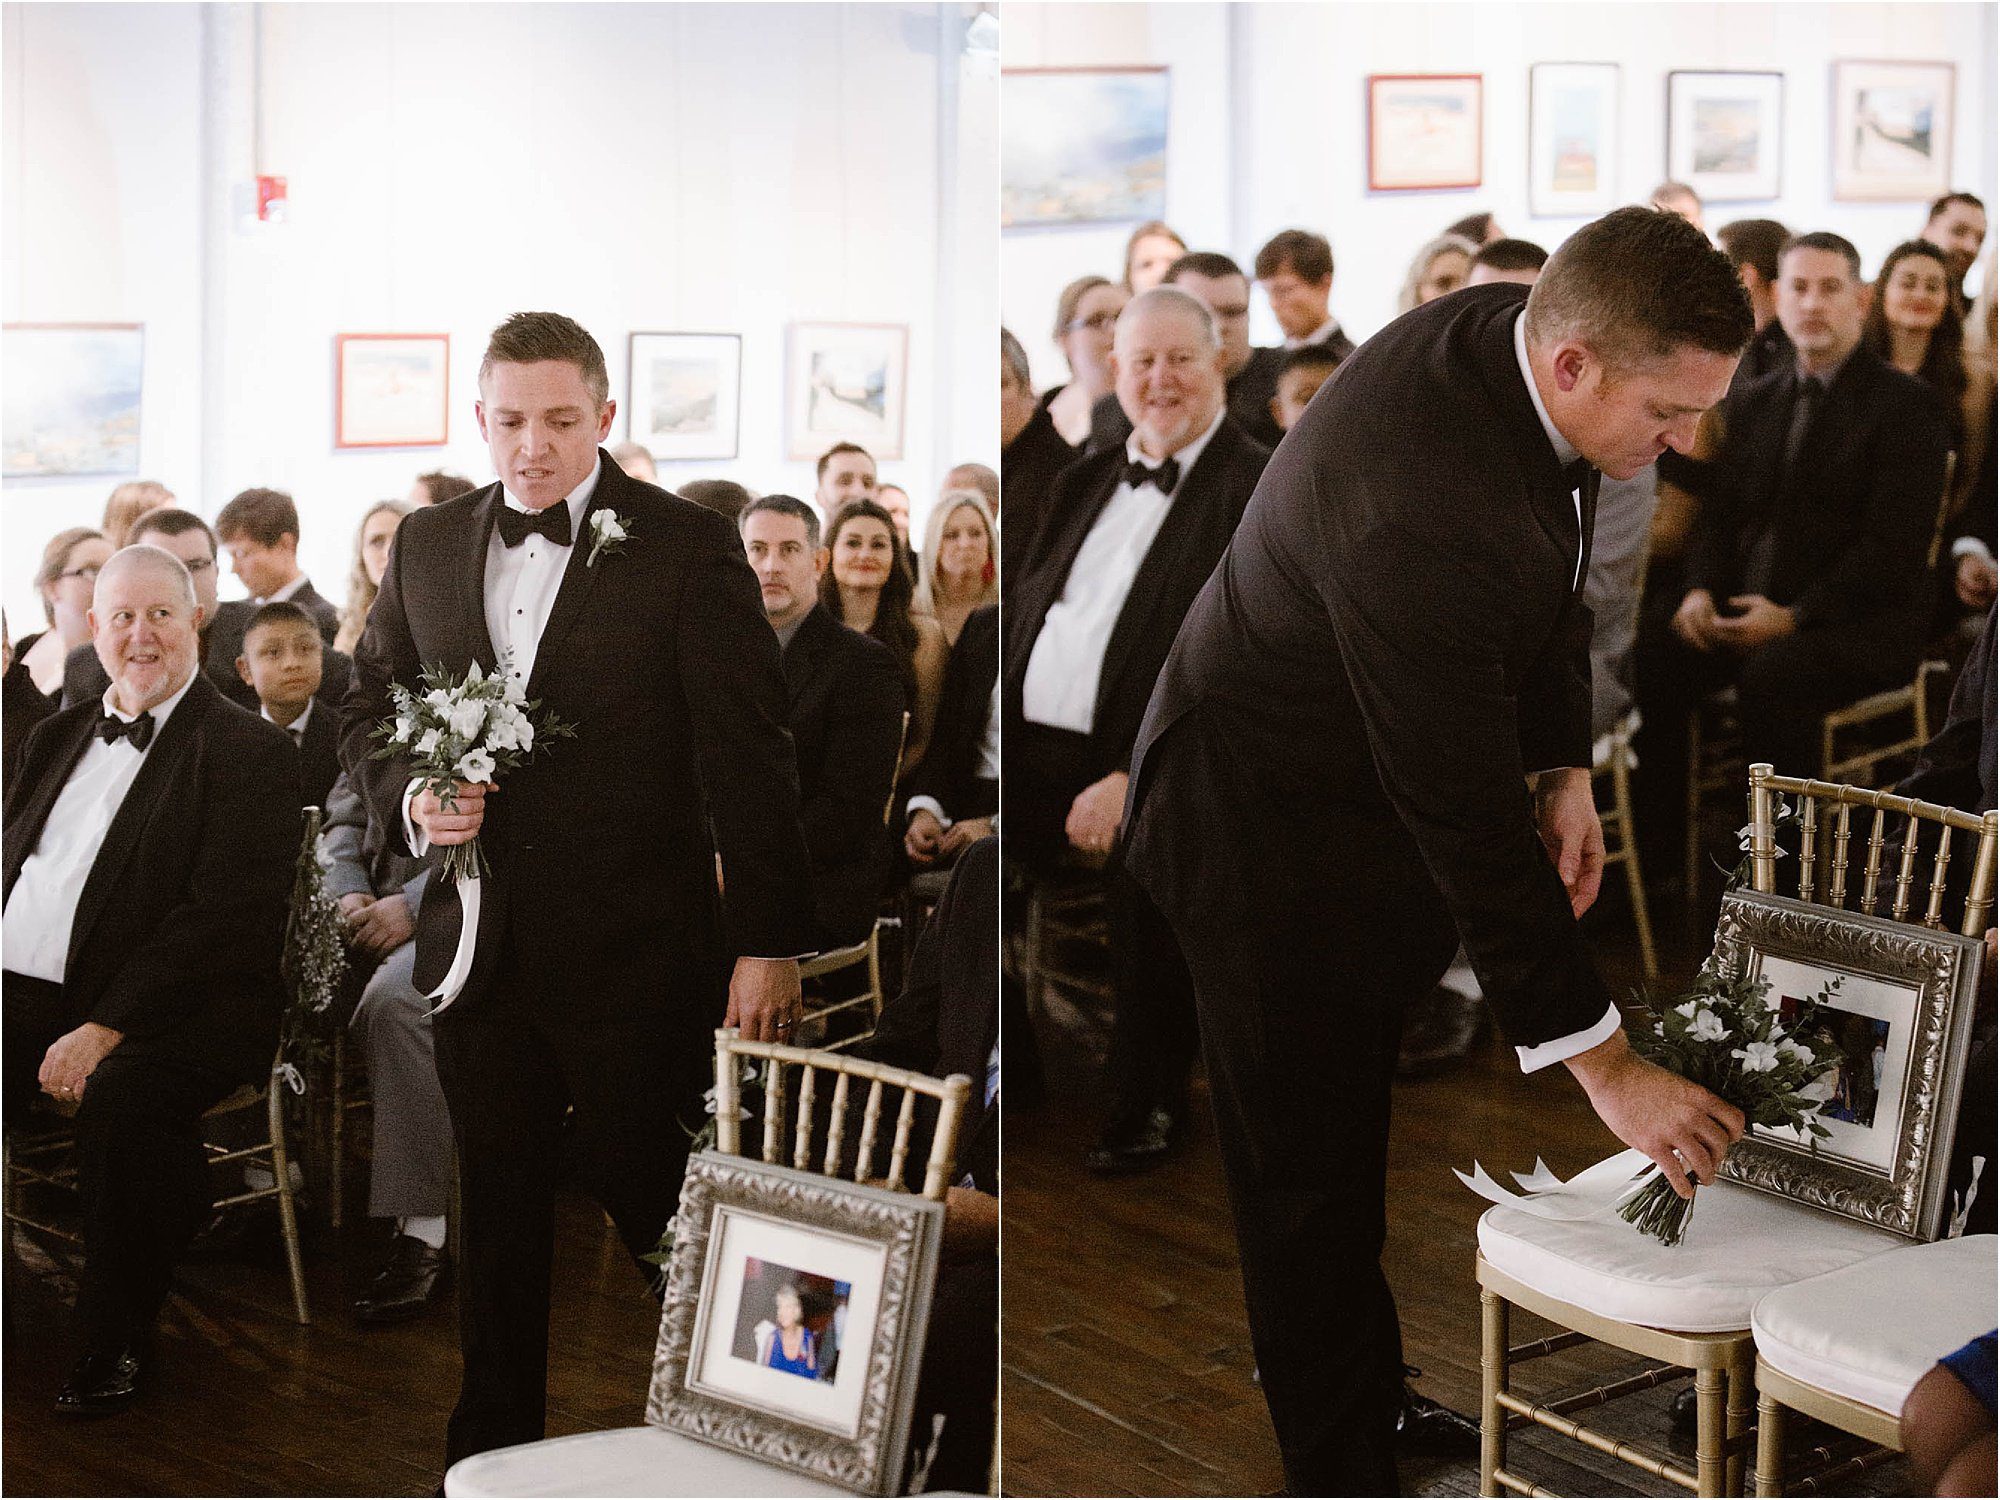 groomsman placing flowers on chair at wedding